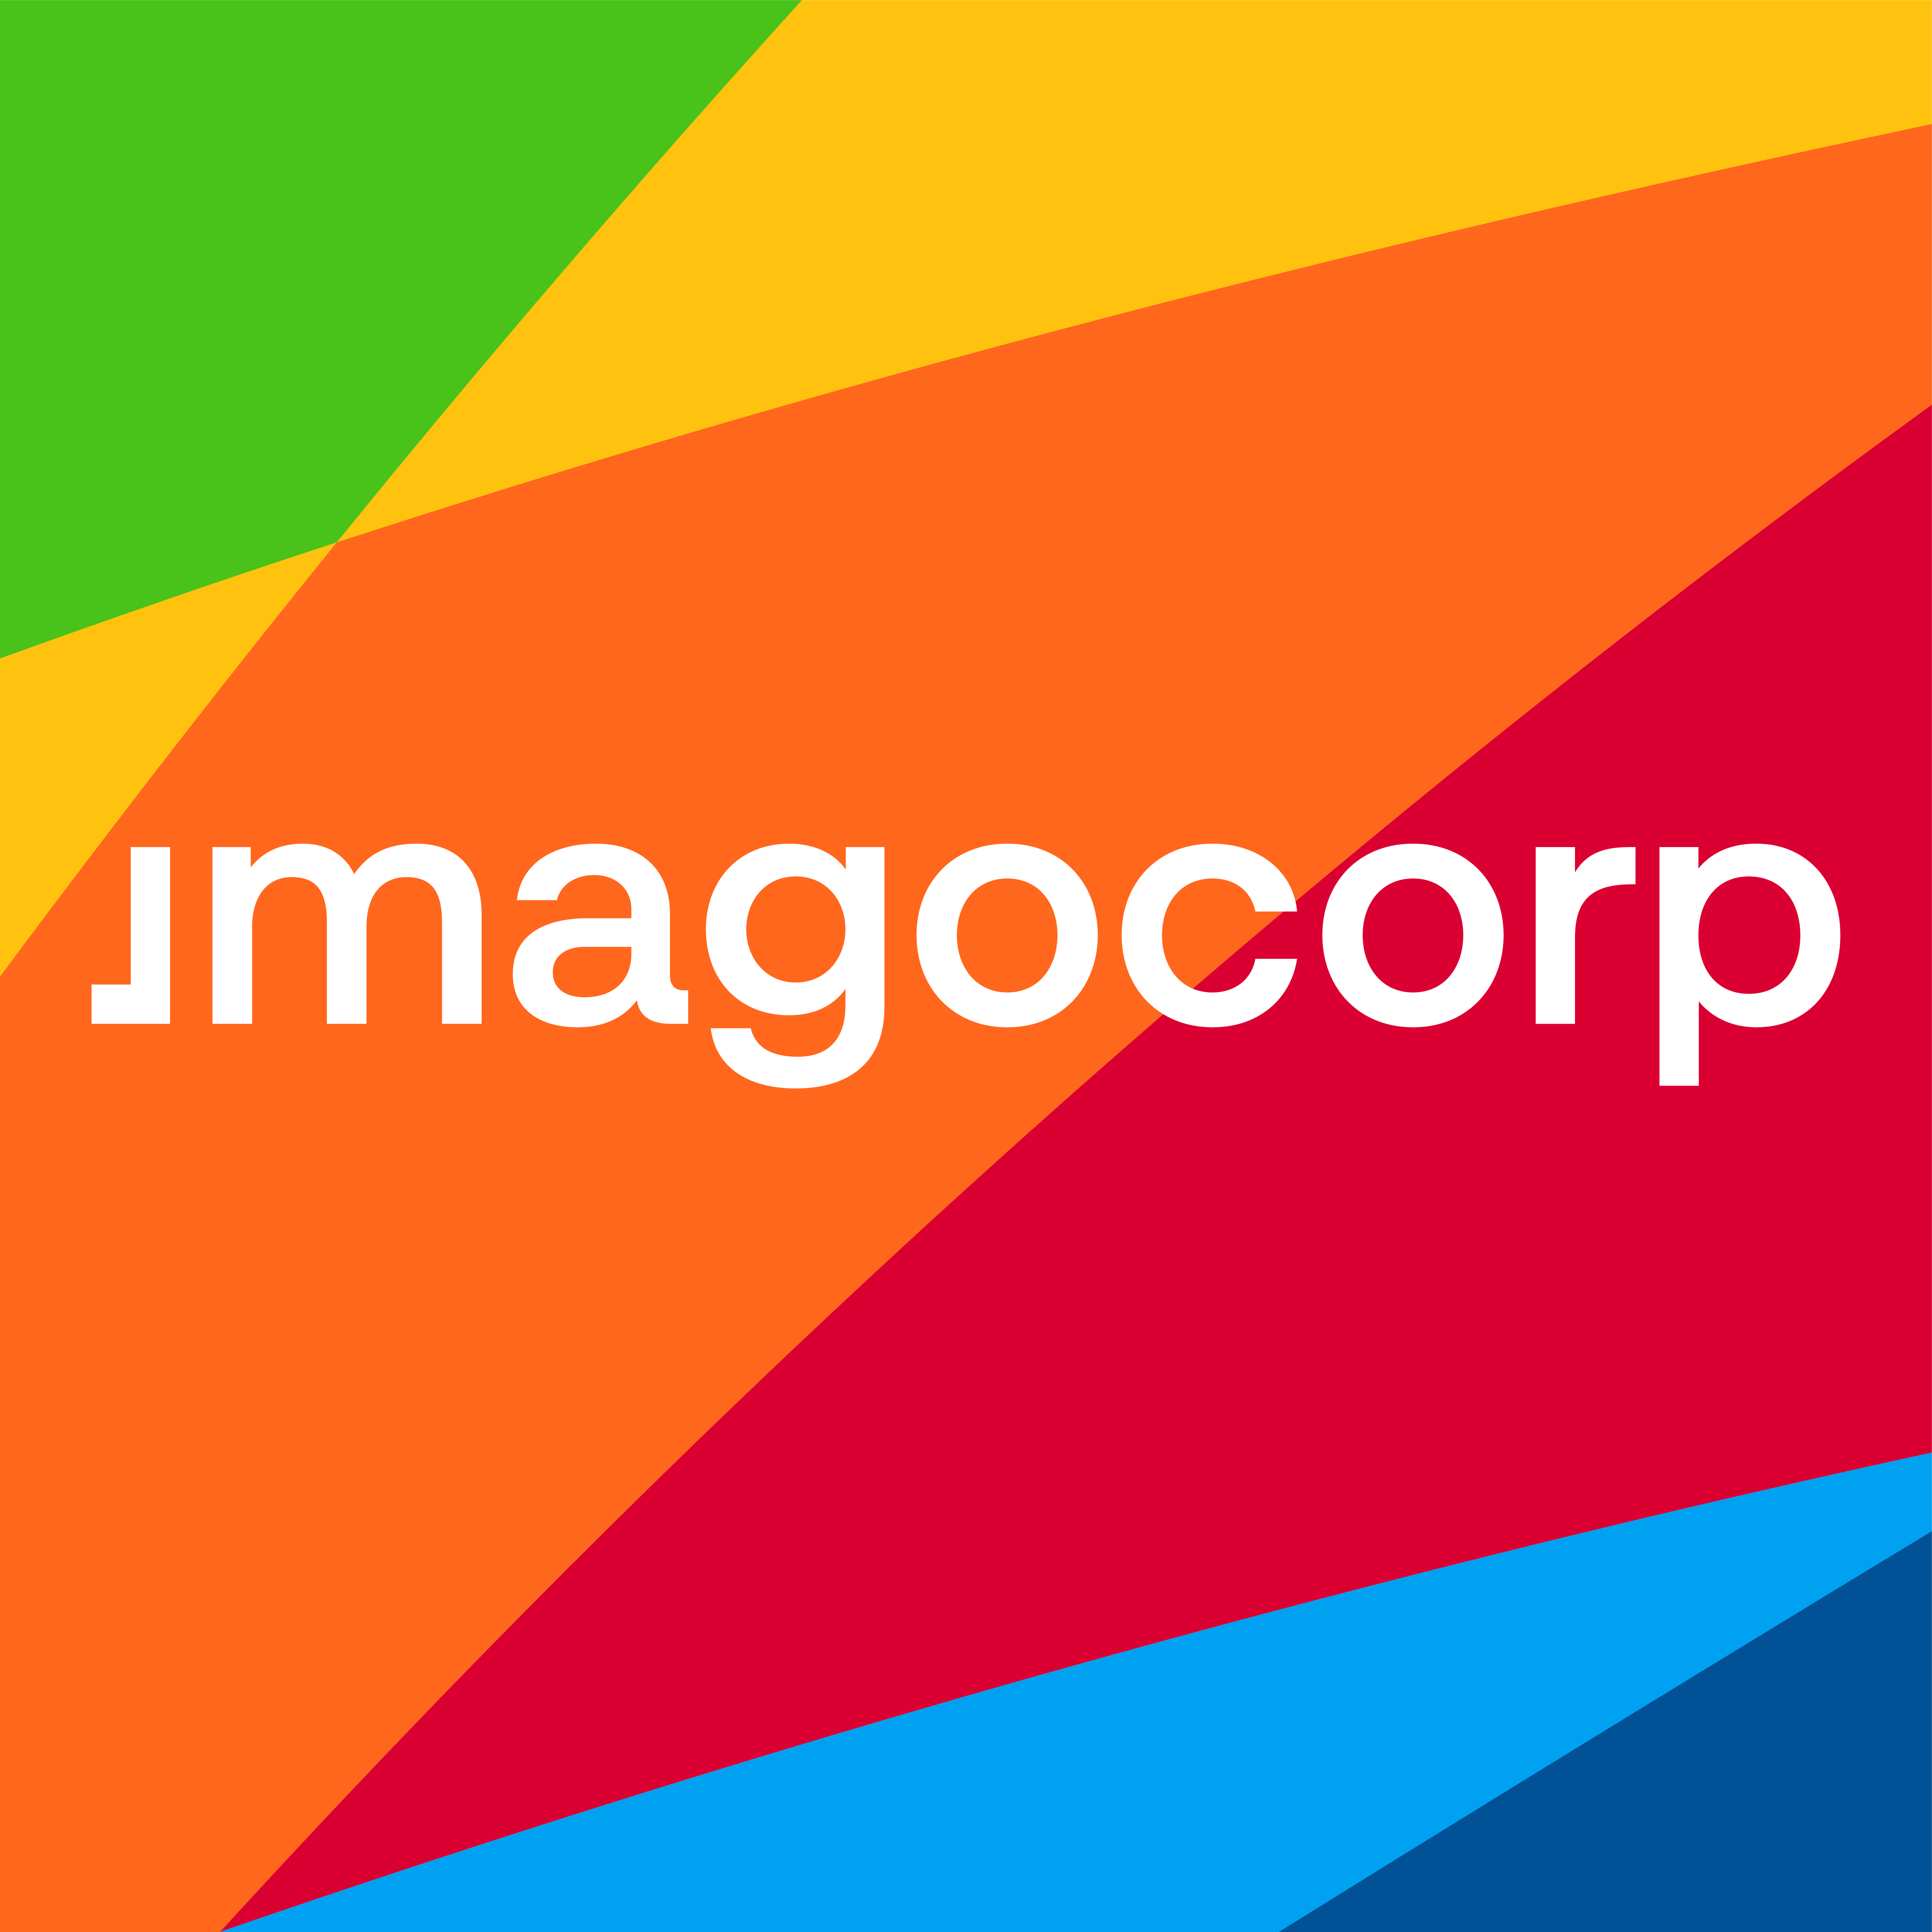 Imagocorp Logo